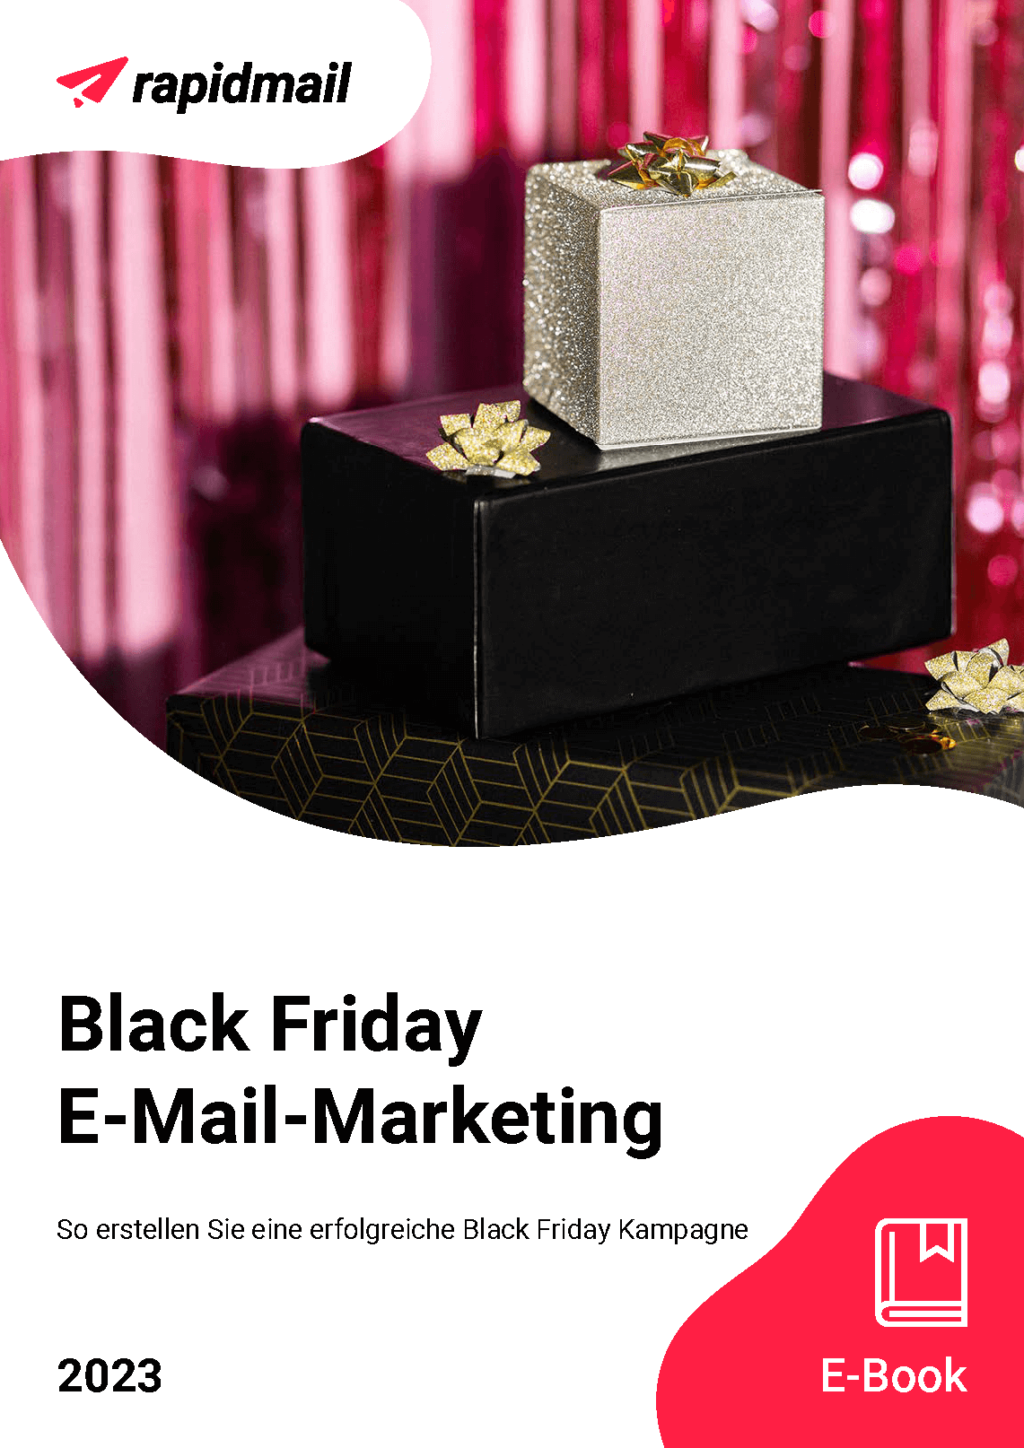 Coverbild des rapidmail E-Books zum Black Friday E-Mail-Marketing